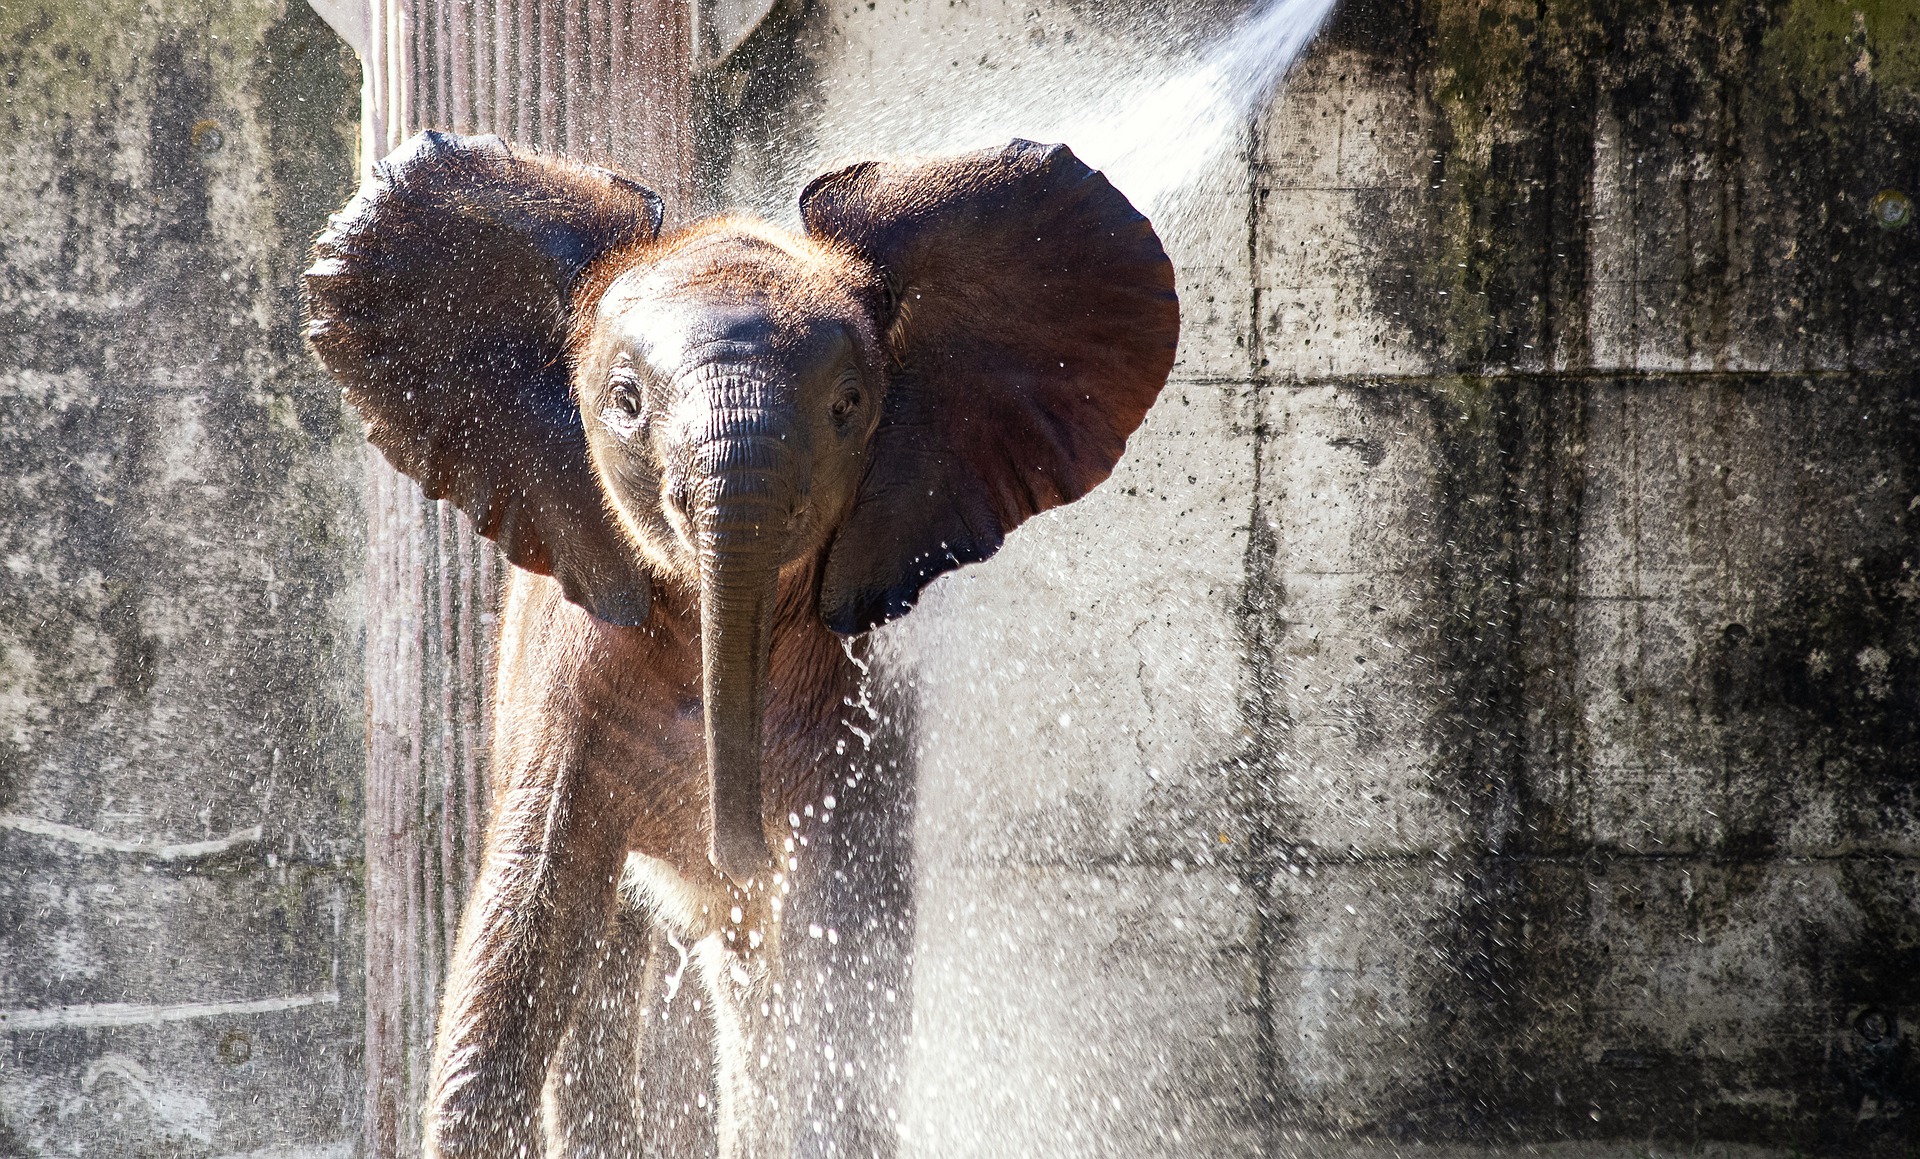 olifant neemt een douche onder stromend water